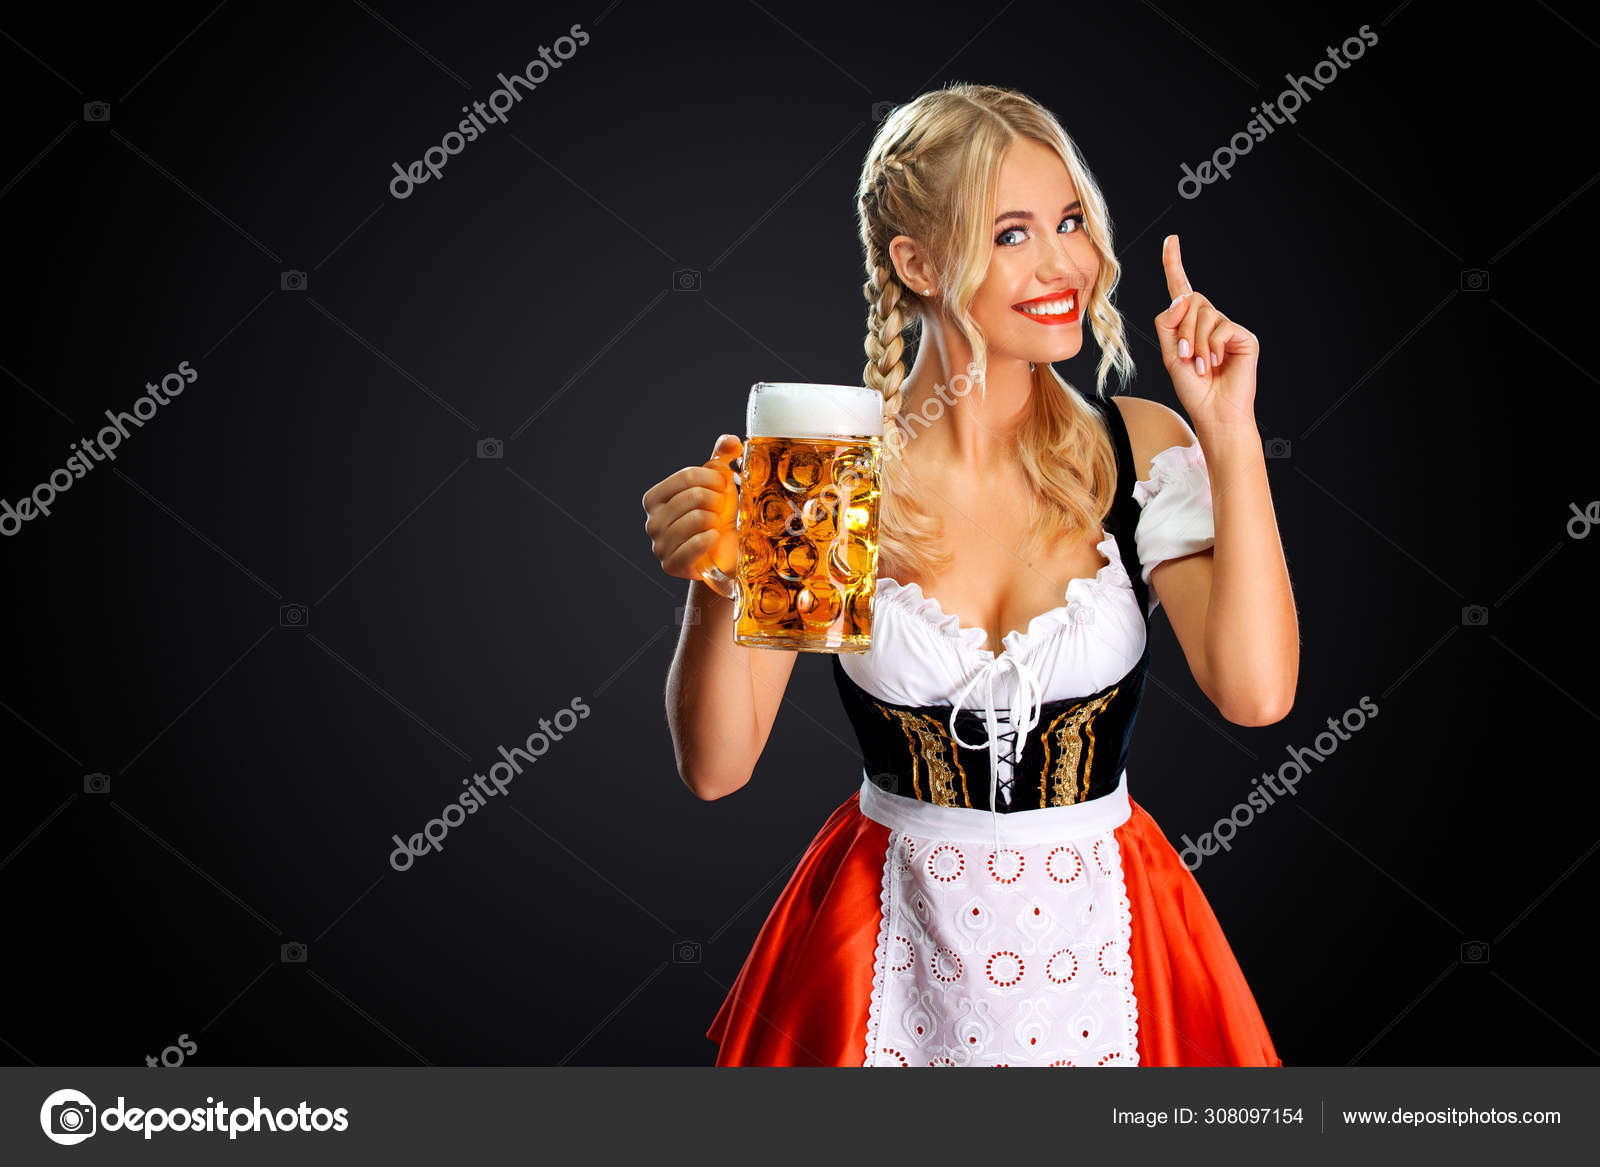 German girl sexy